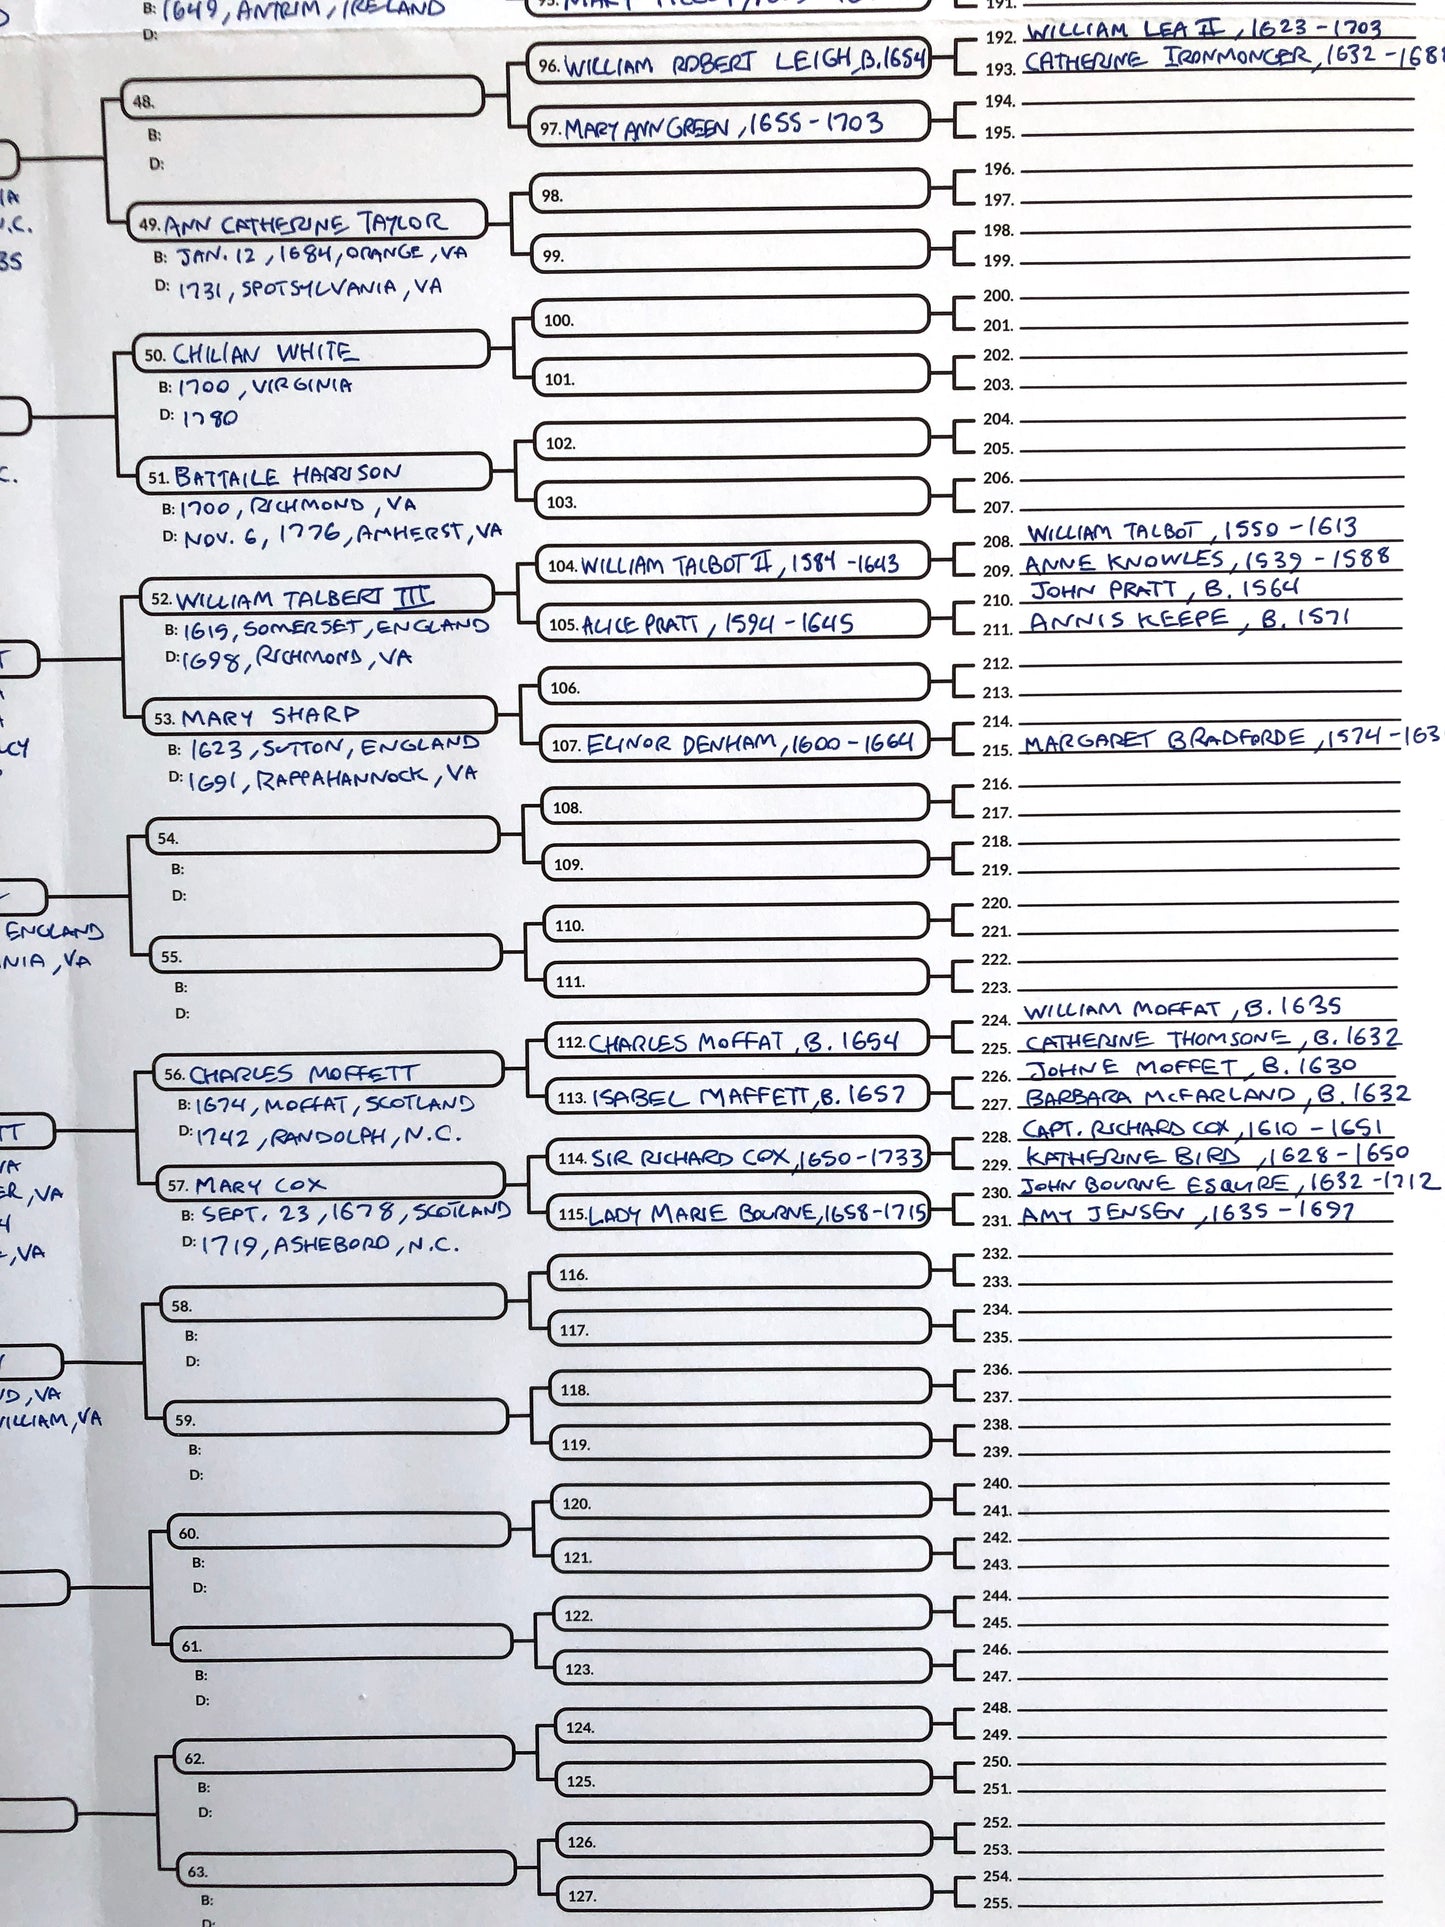 TEN Blank Pedigree Charts (8 generations/256 names per sheet)